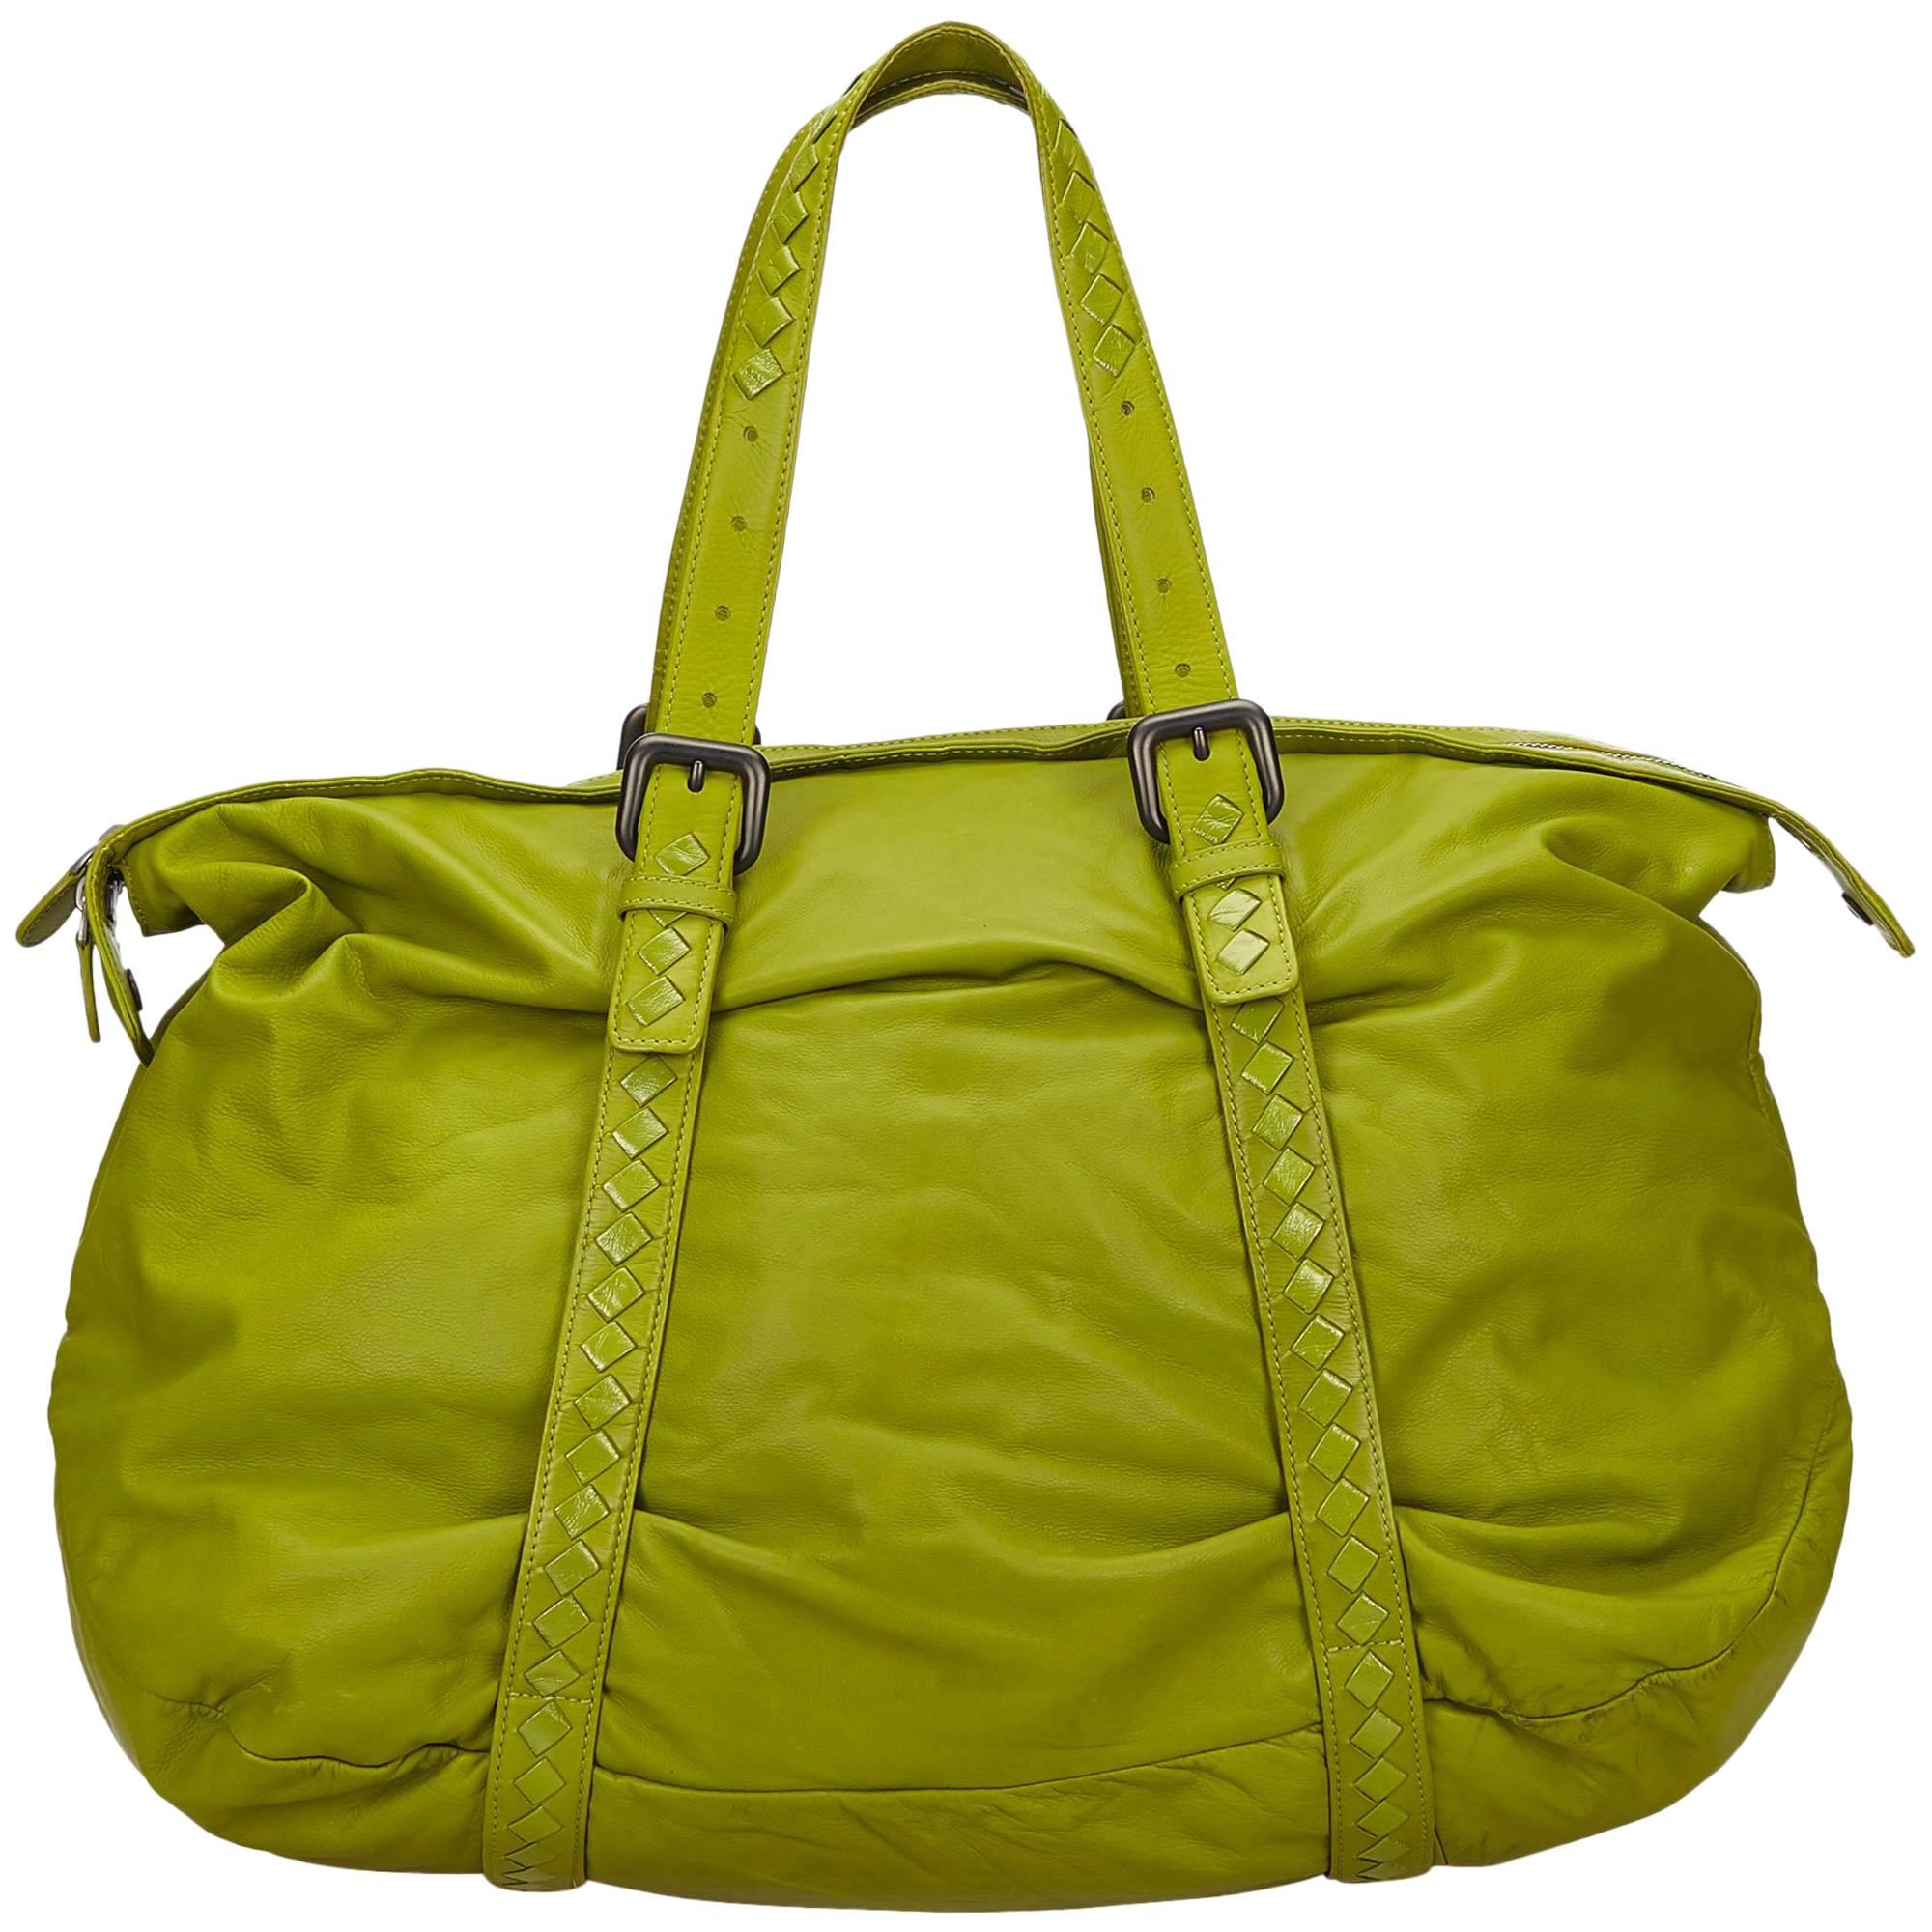 Bottega Veneta Green Leather Shoulder Bag